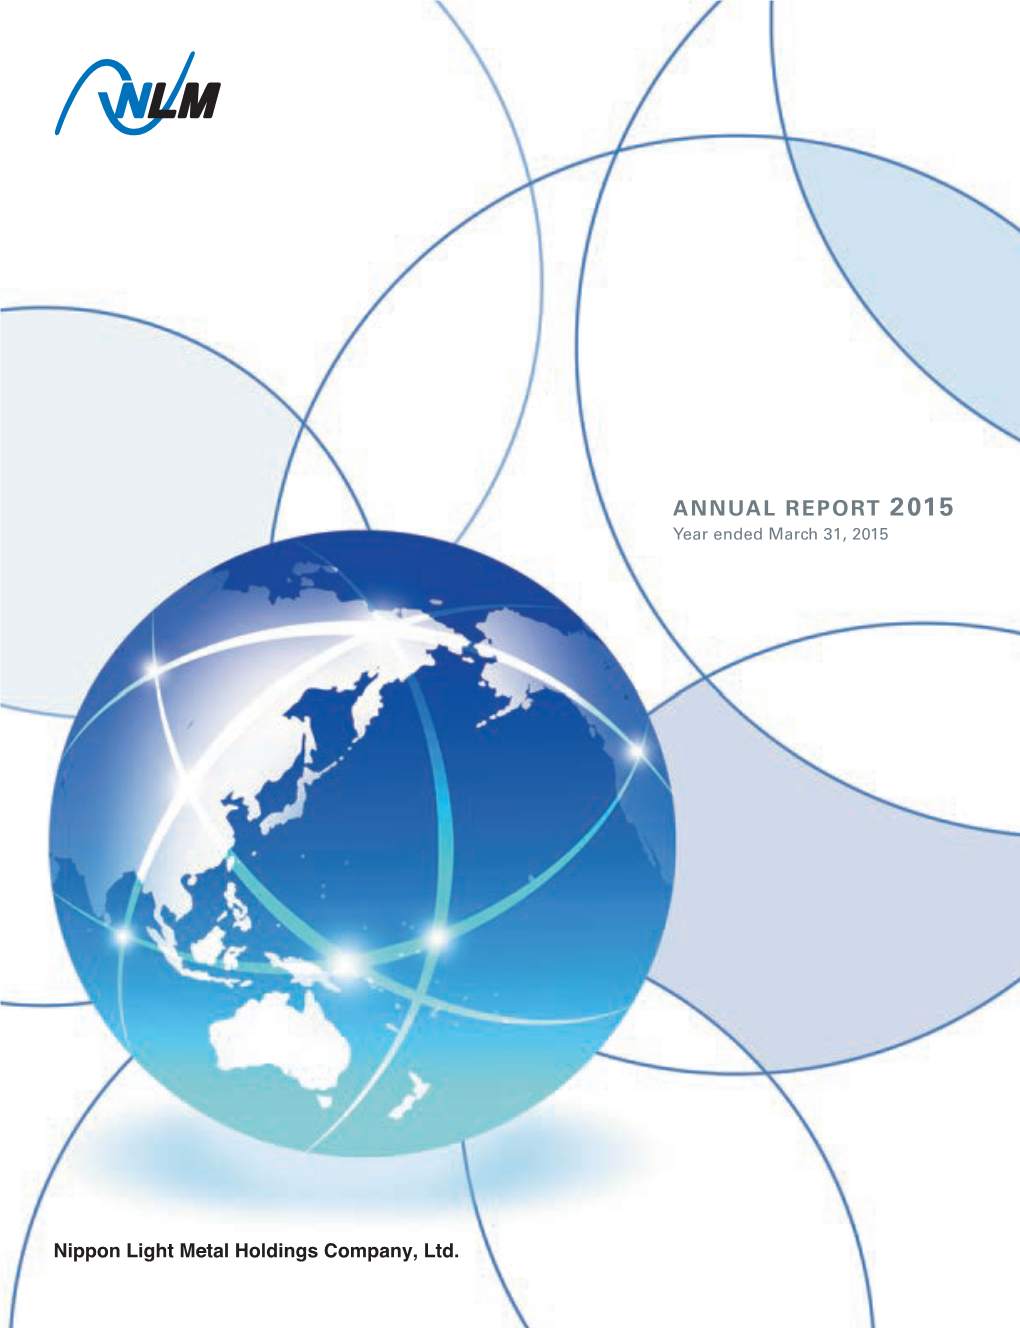 Nippon Light Metal Holdings Company, Ltd. Annual Report 2015